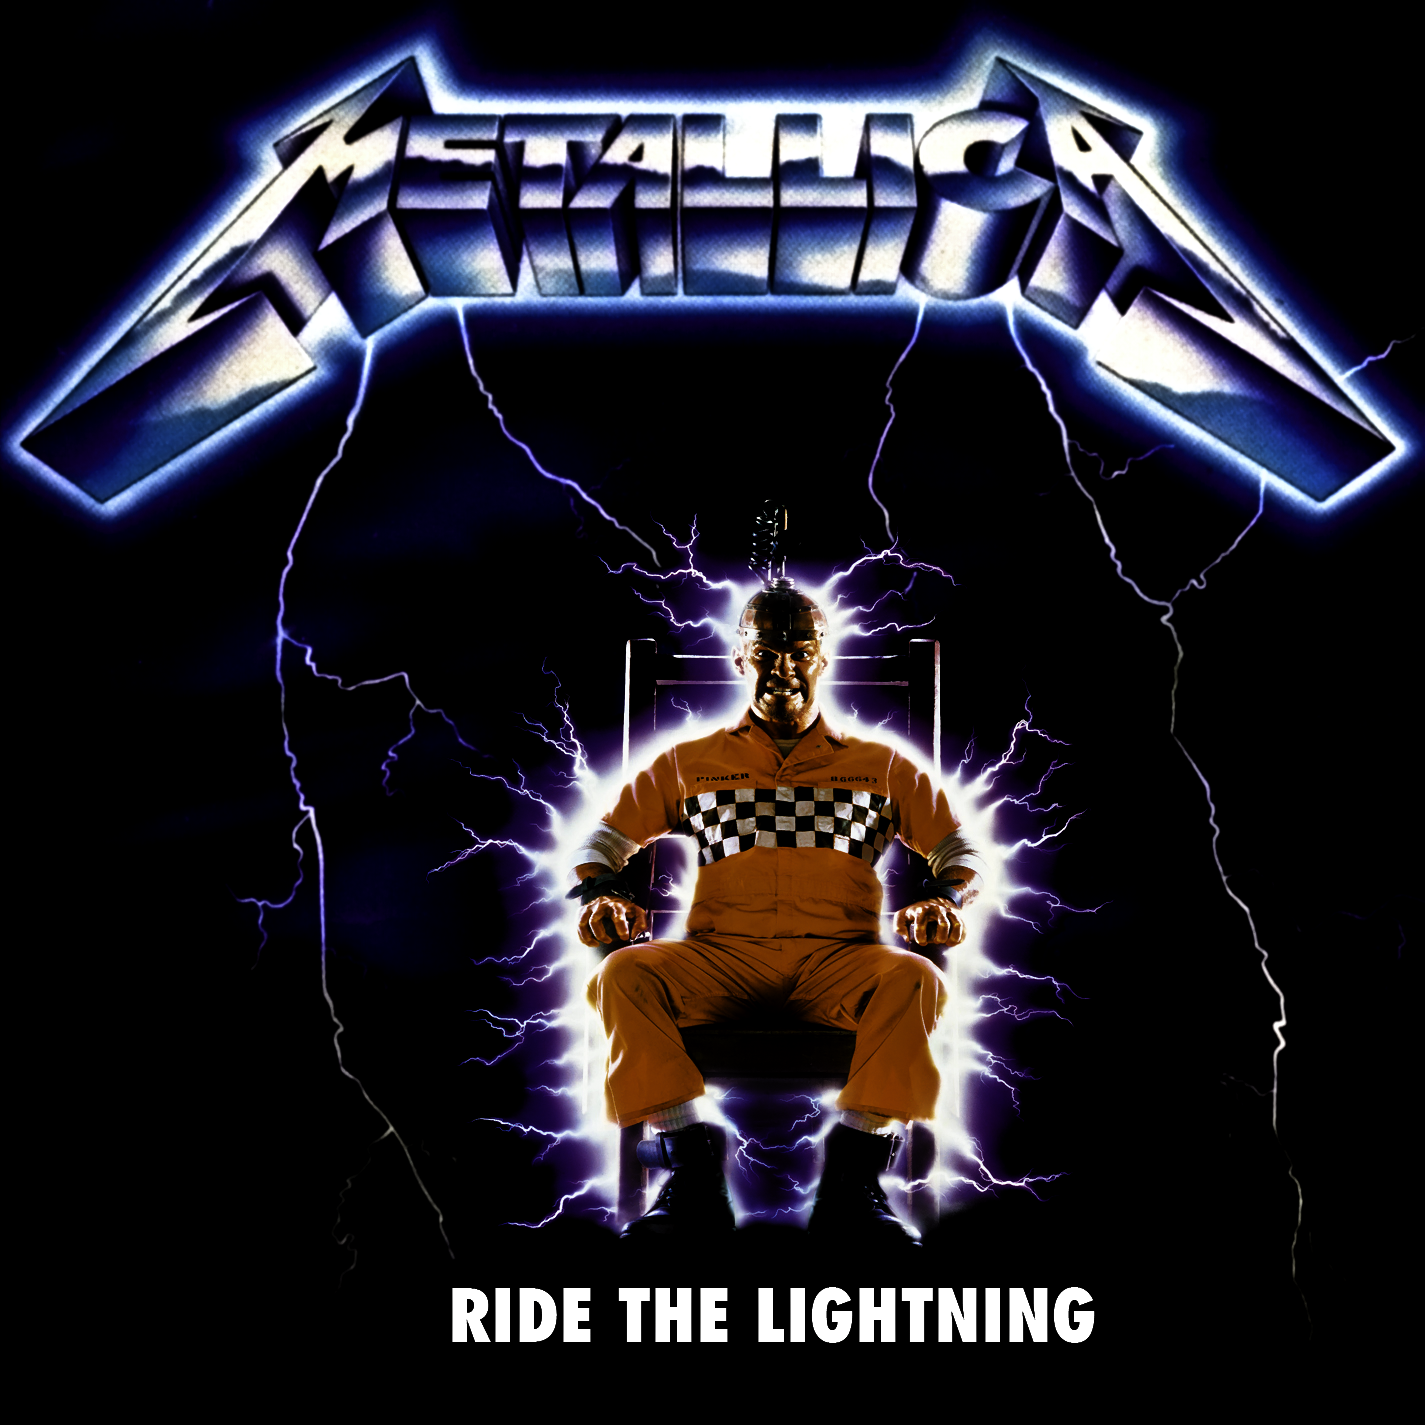 Metallica Ride The Lightning Wallpapers